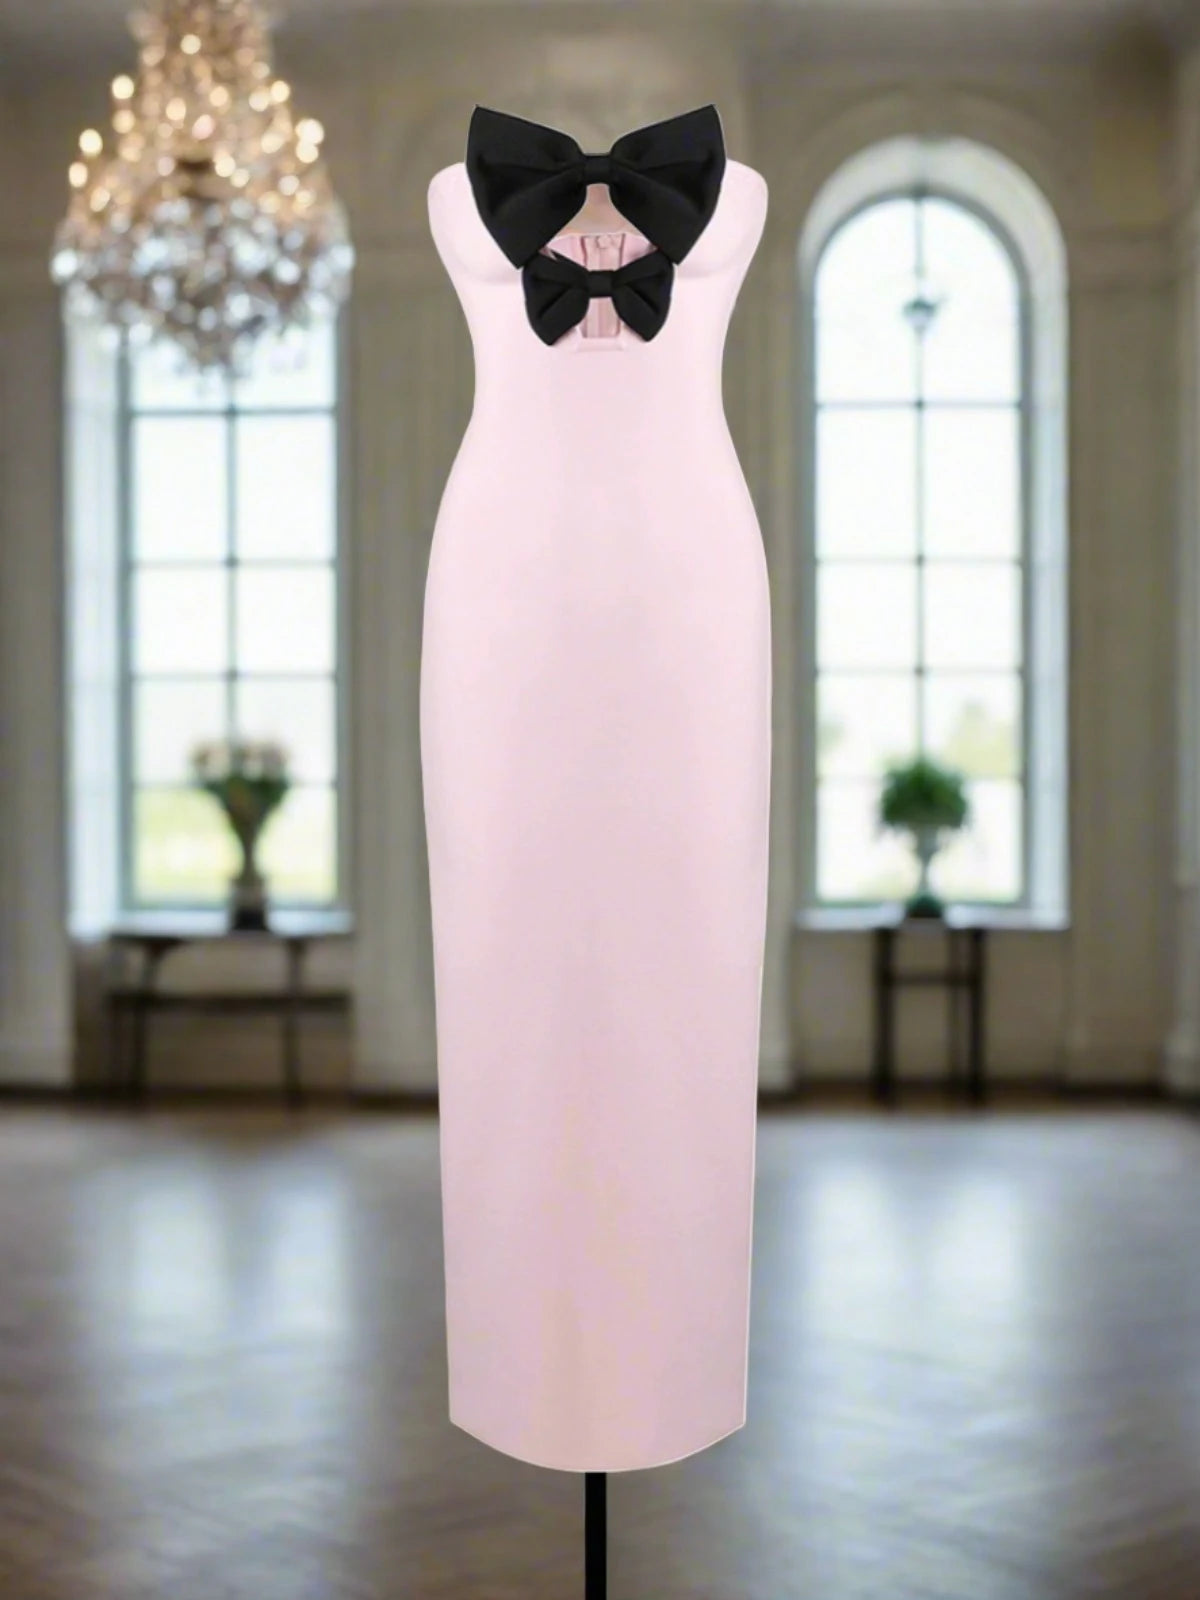 Black Bow Pink Column Dress